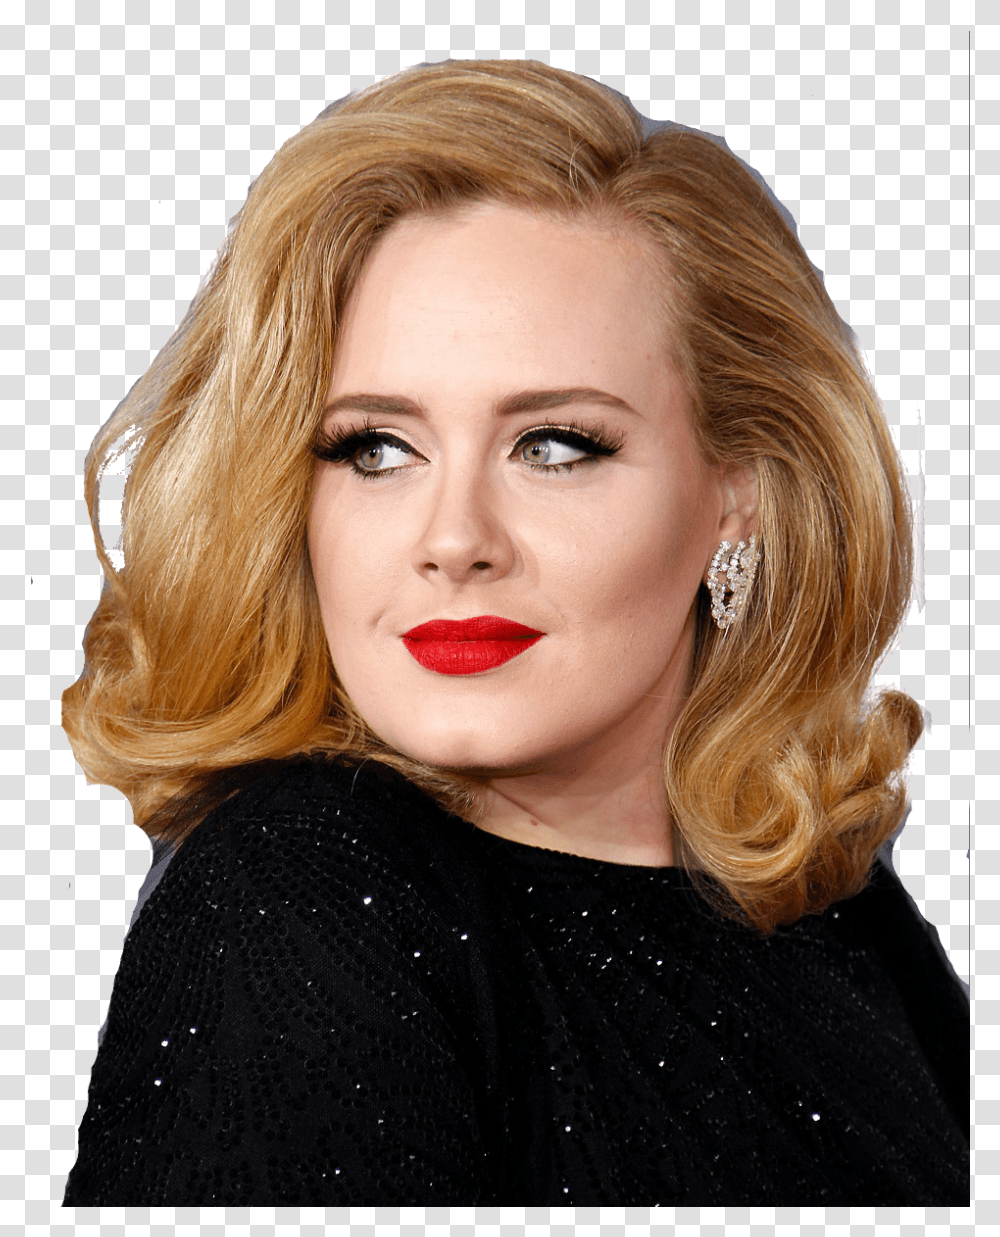 Download Adele Images Hq Image Adele, Blonde, Woman, Girl, Kid Transparent Png